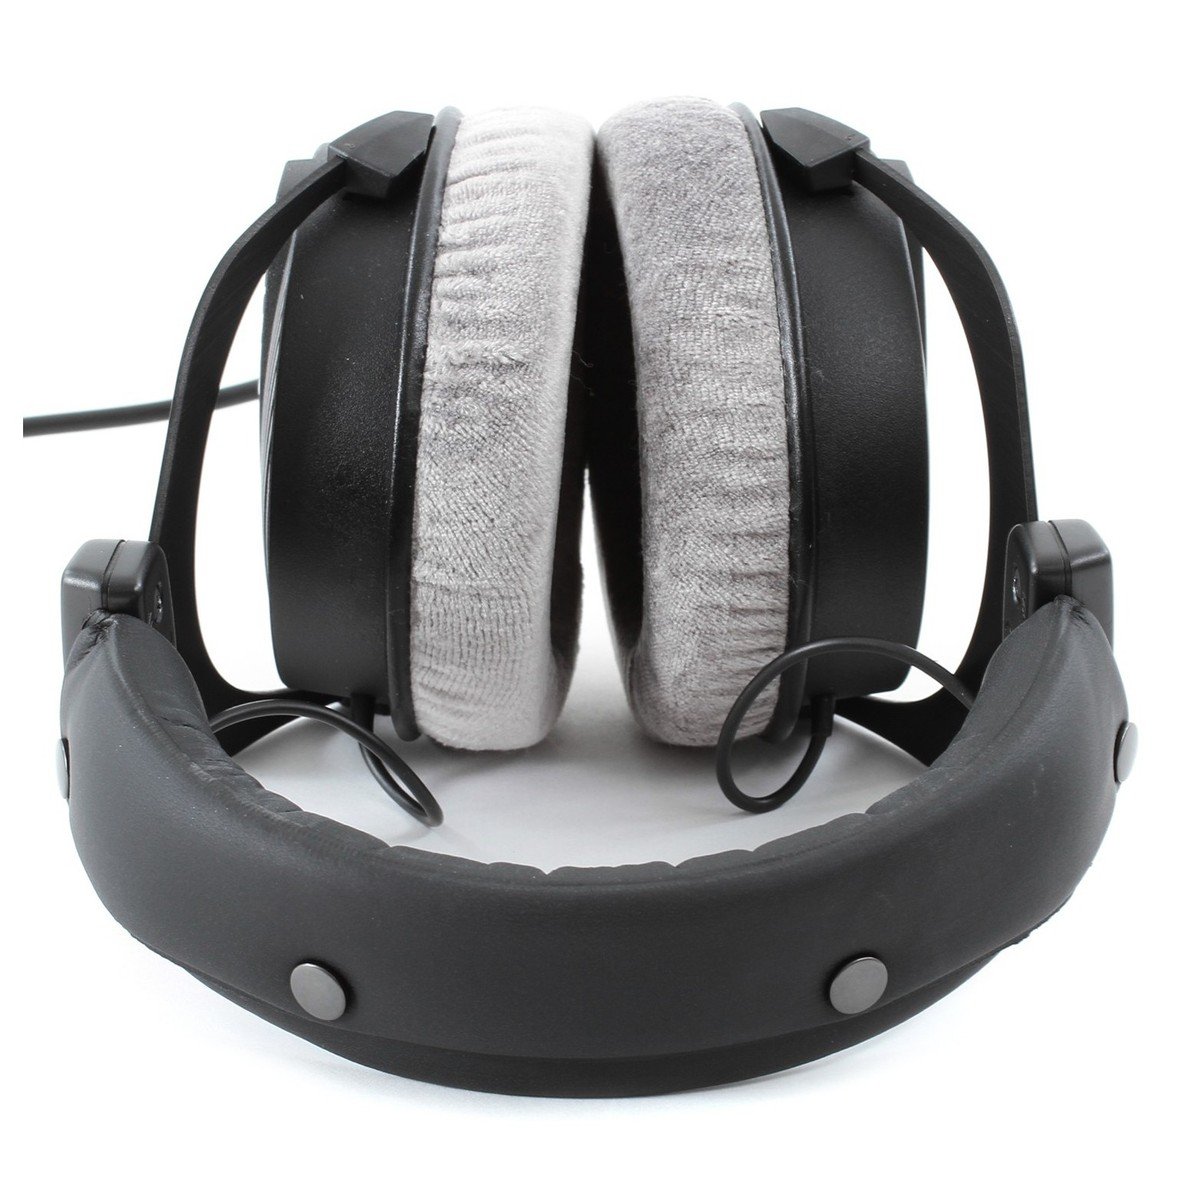 Beyerdynamic DT 990 Pro 250 Ohm Open Back Studio Headphones for Mixing  Mastering